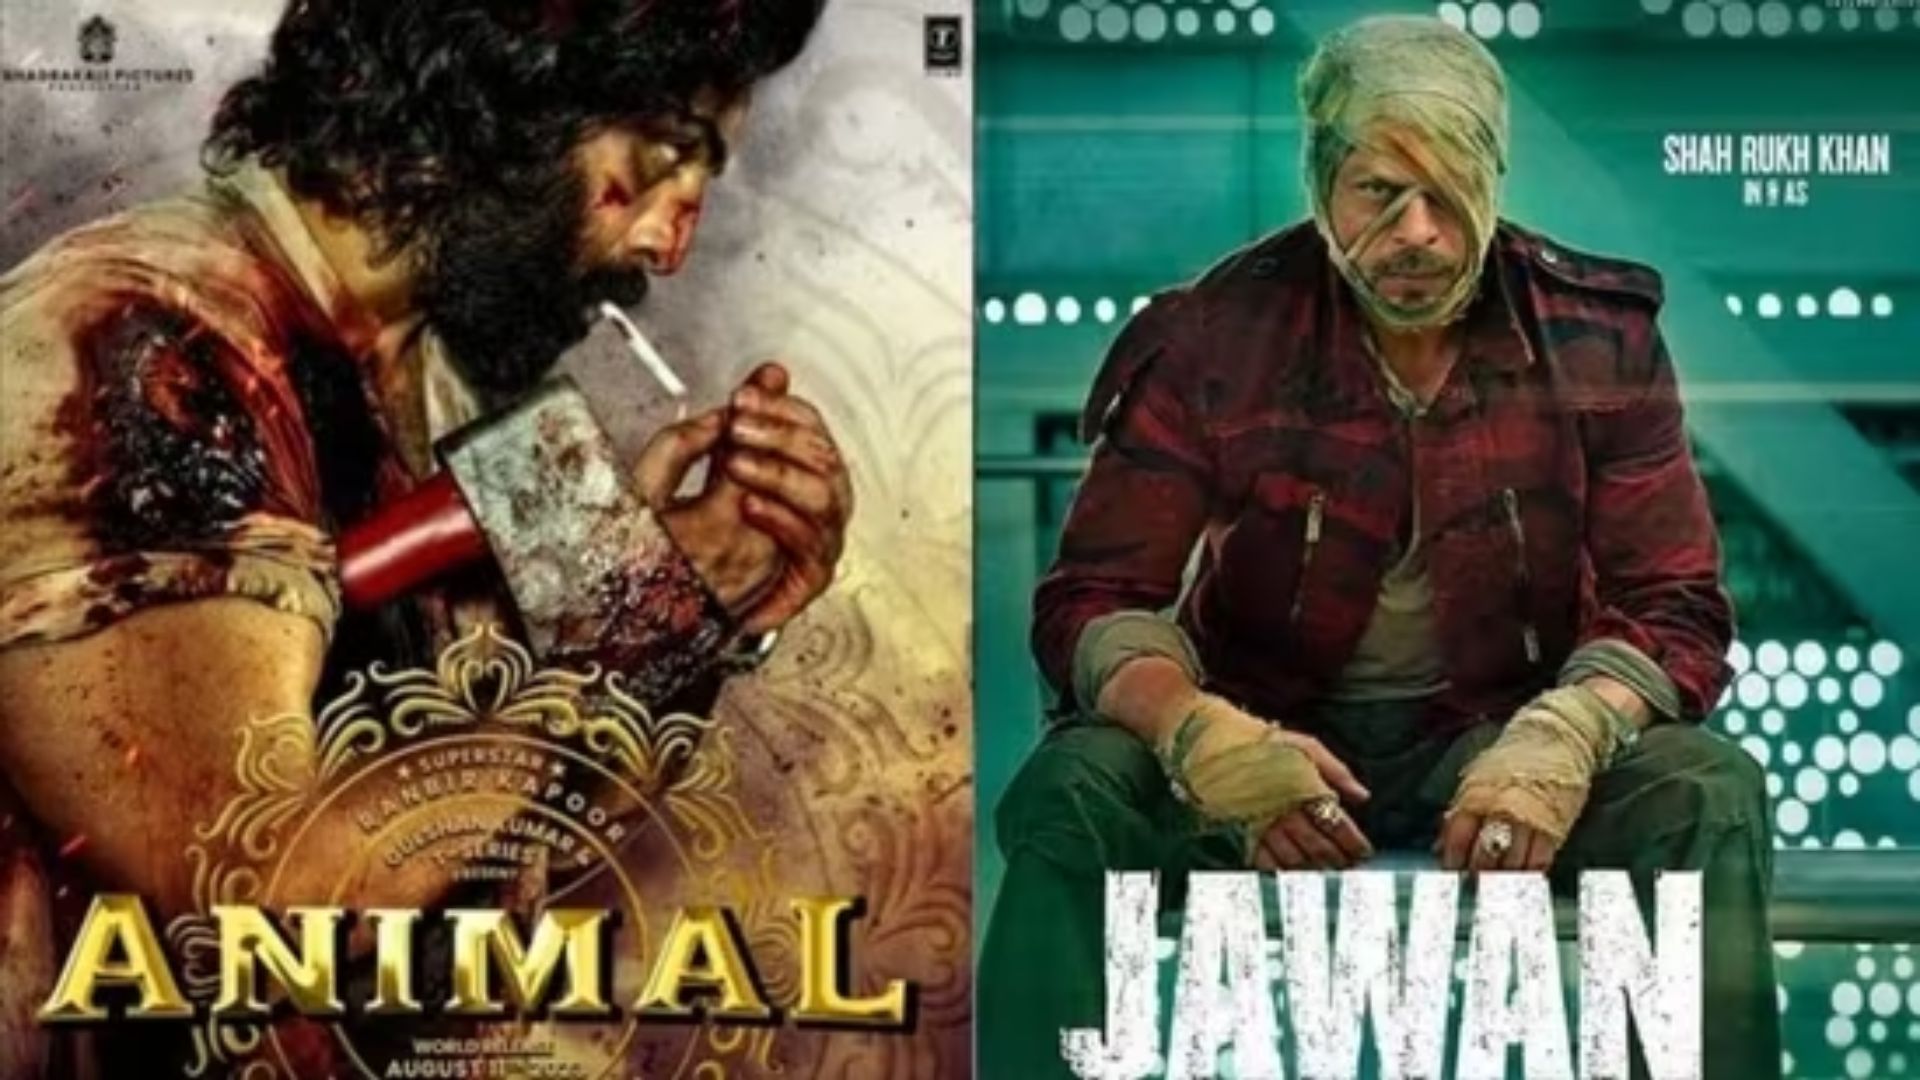 Animal box office prediction Ranbir Kapoor-starrer all set to beat Shah Rukh Khan's Jawan opening in Telugu